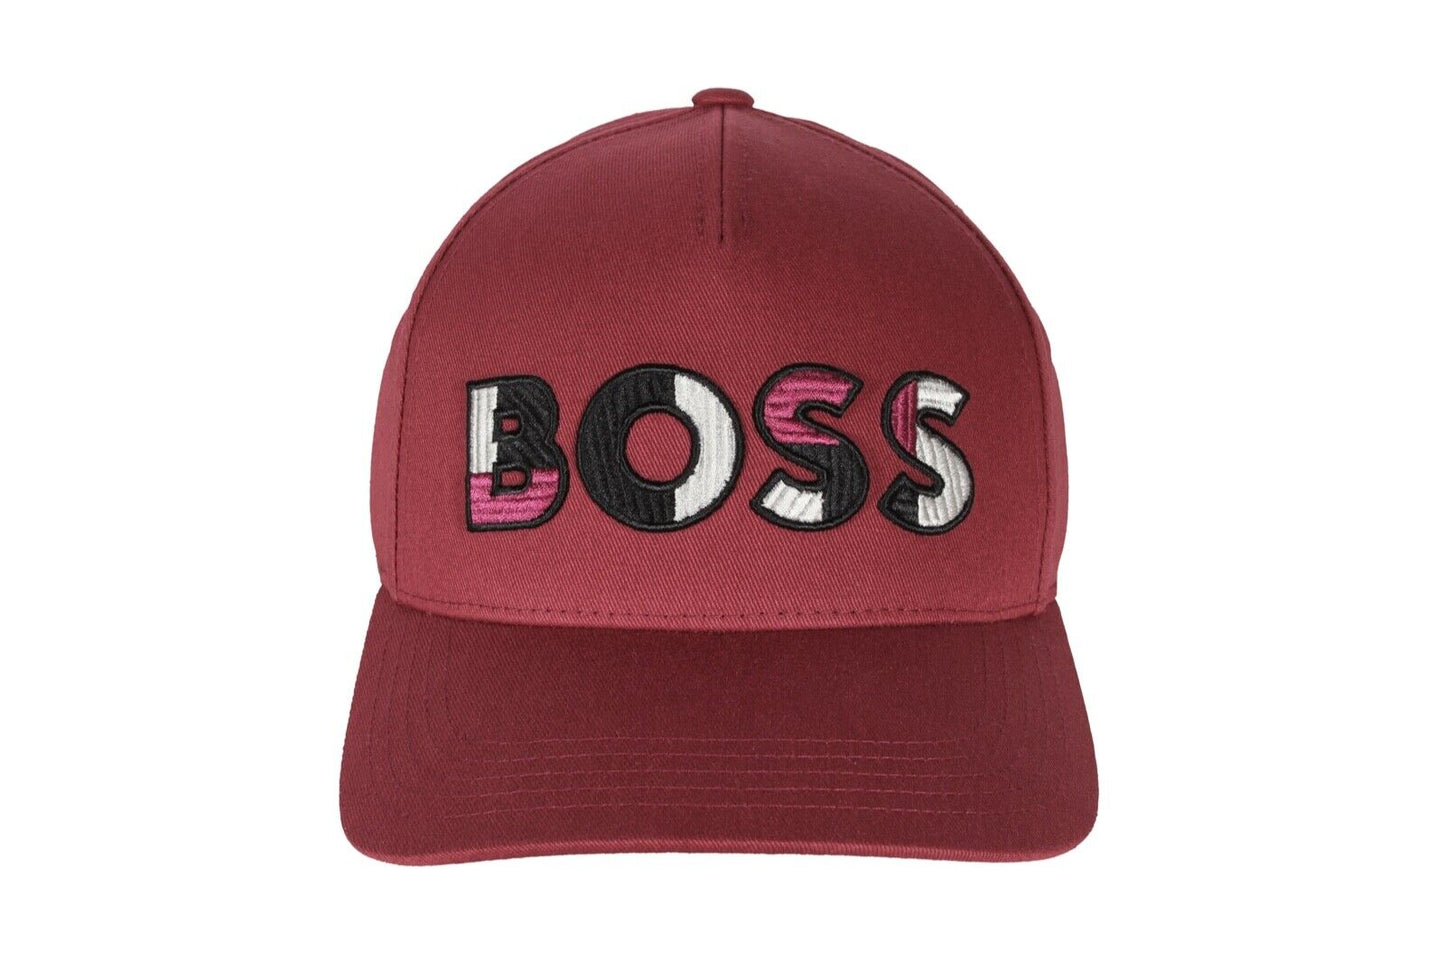 HUGO BOSS Sevile-Boss-2 Men’s Cotton-Twill Cap with Logo in Red 50471927 673